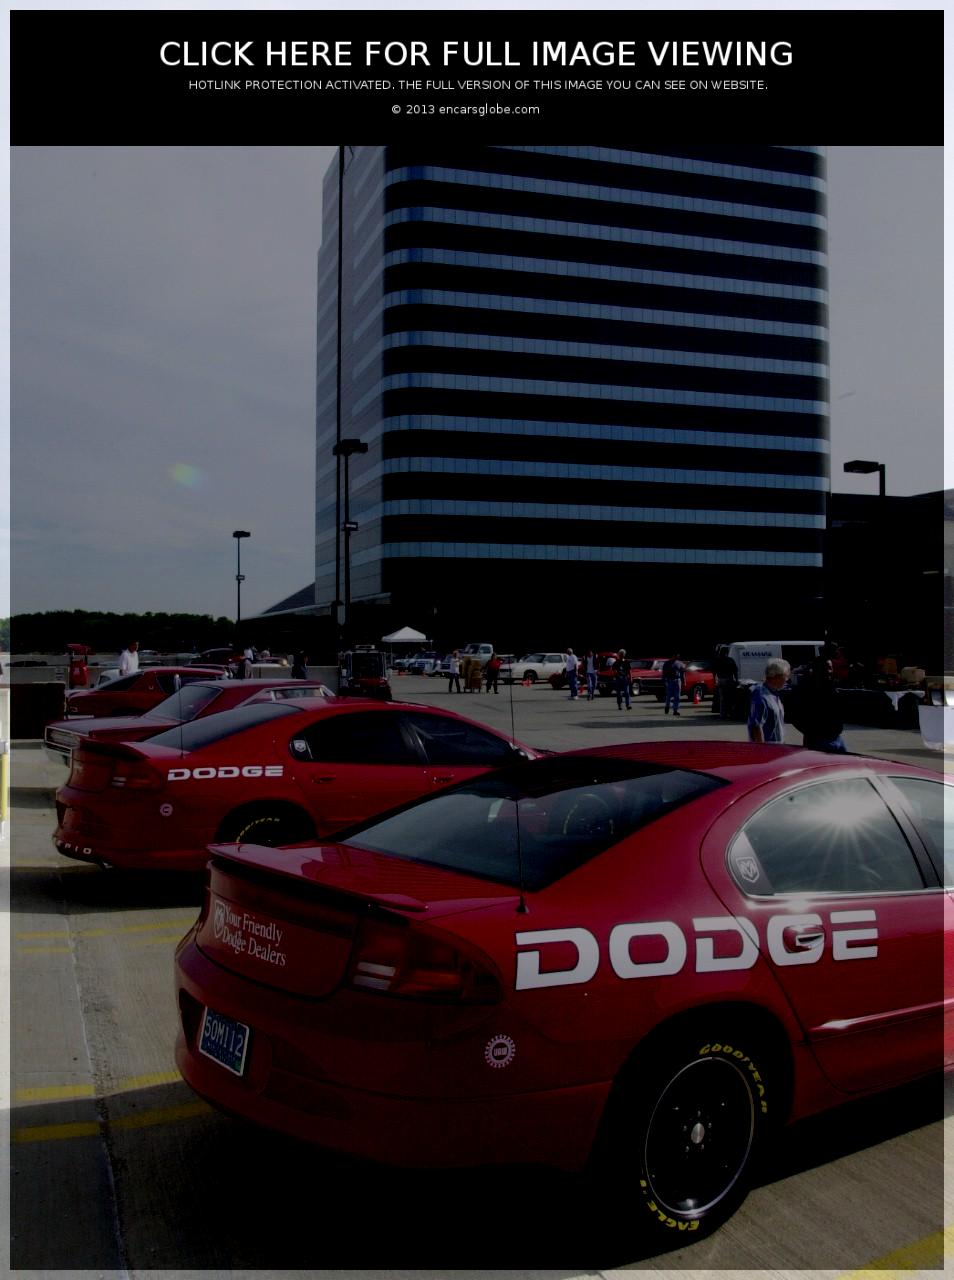 Dodge Intrepid NASCAR: 01 photo * Dodge Intrepid NASCAR: 02 photo